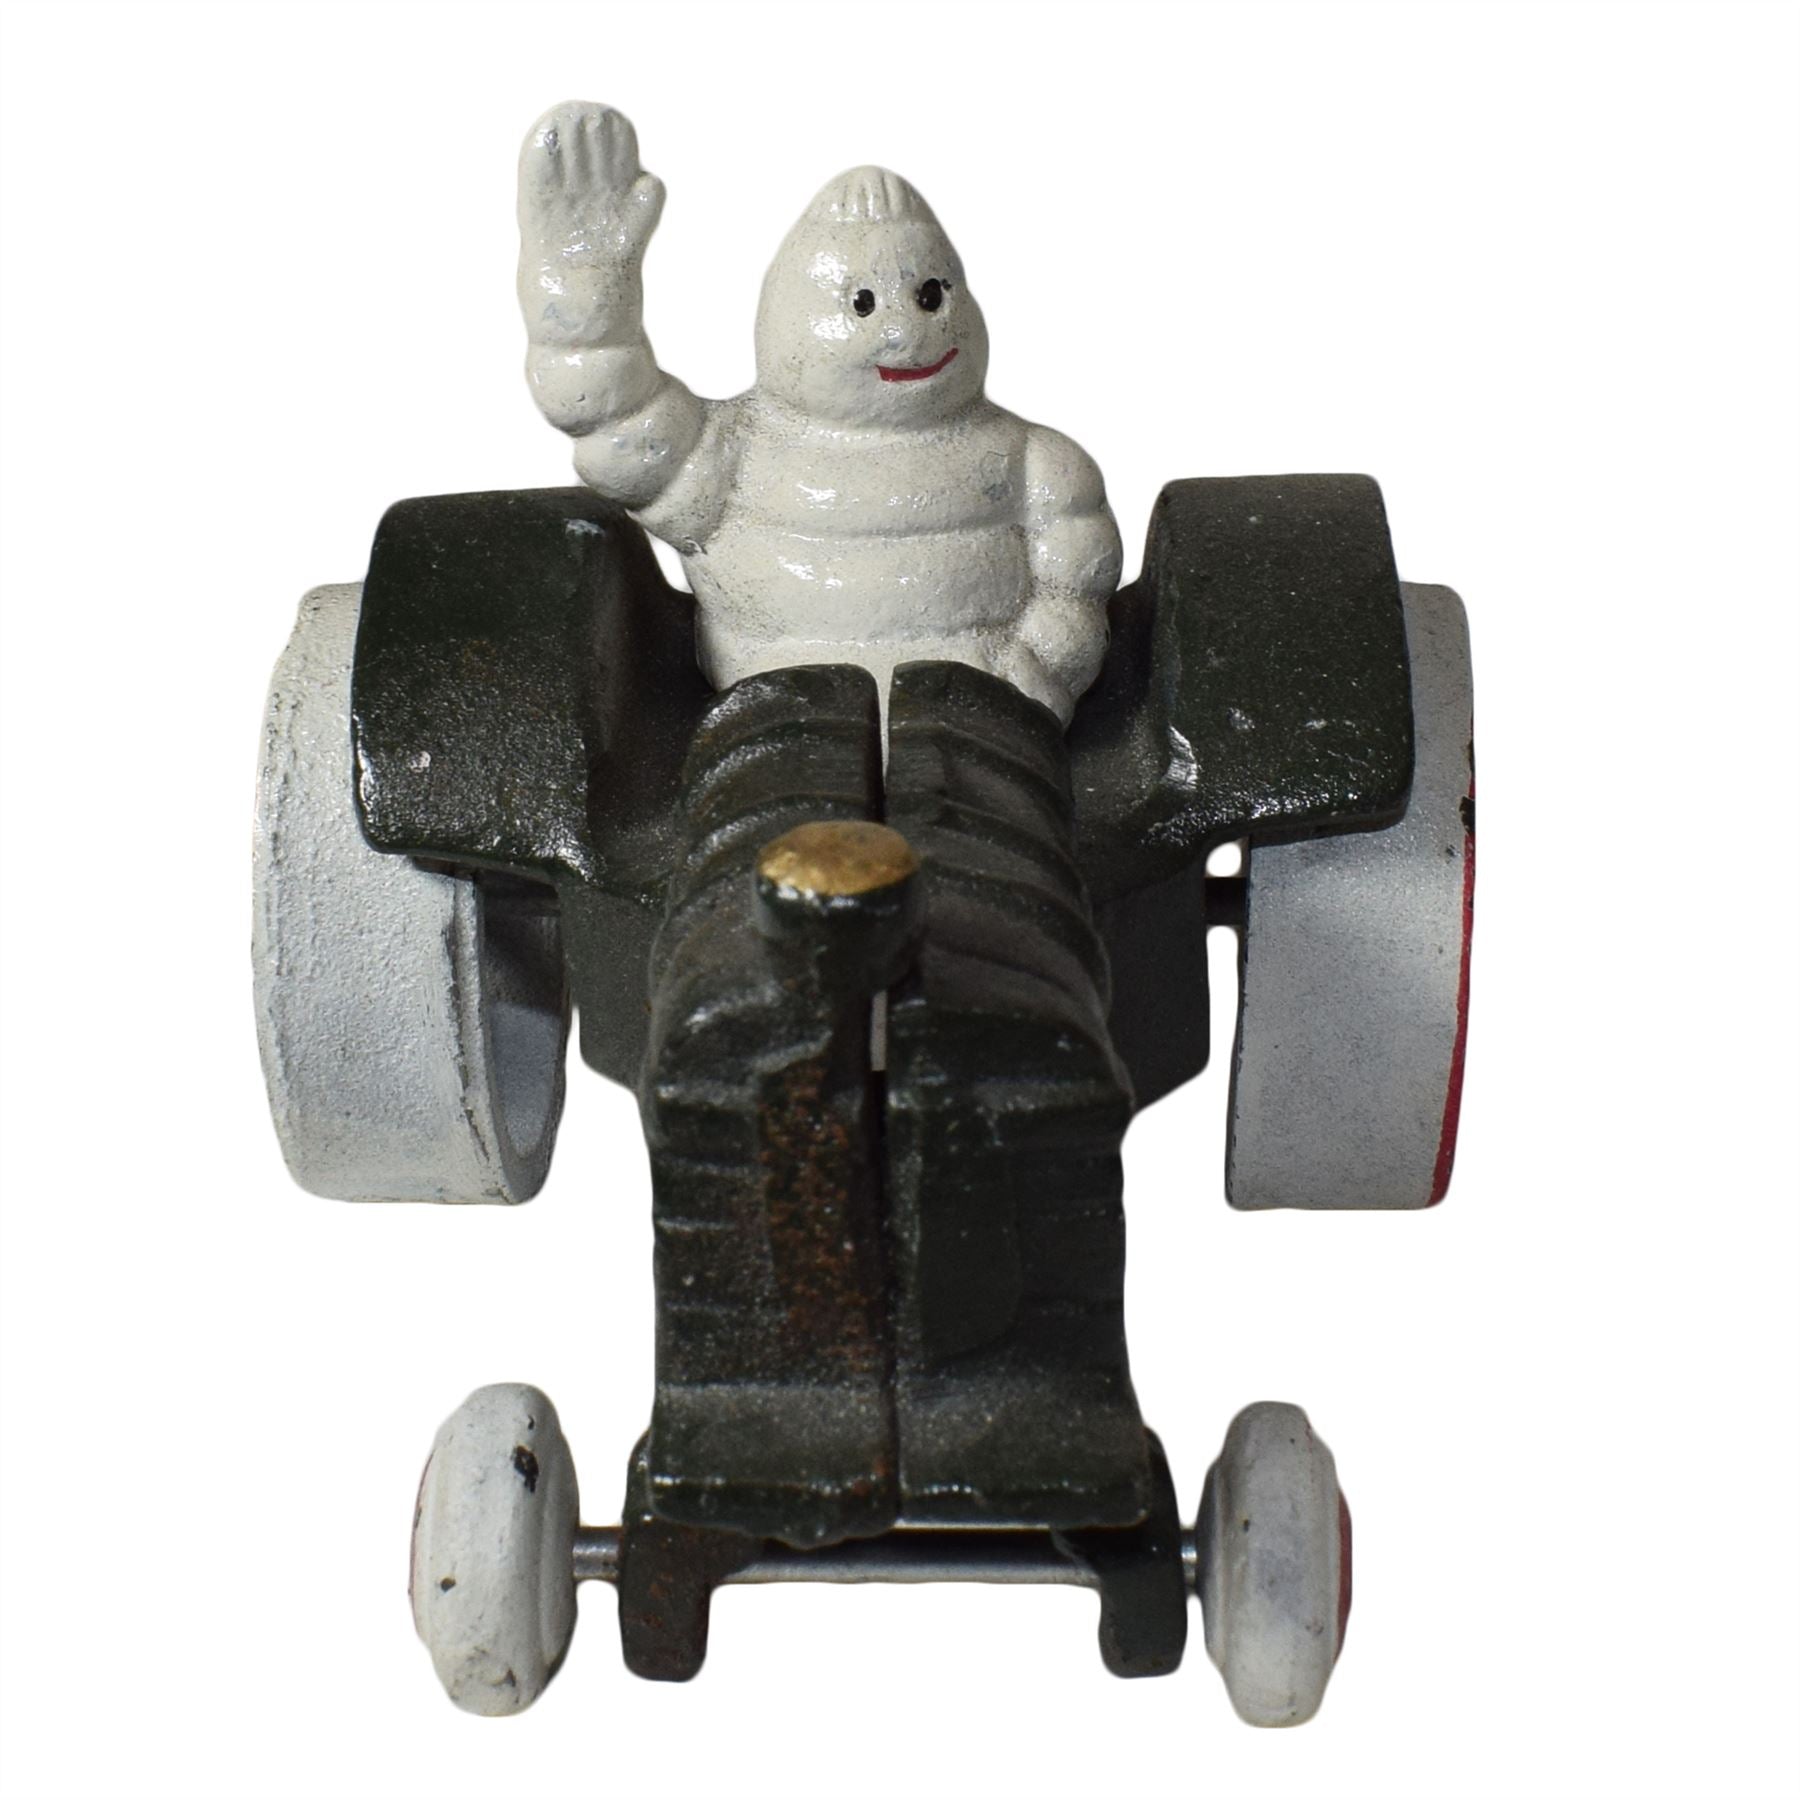 Michelin Man Waving In Tractor Mascot Figure Statue Bibendum Figurine Cast Iron